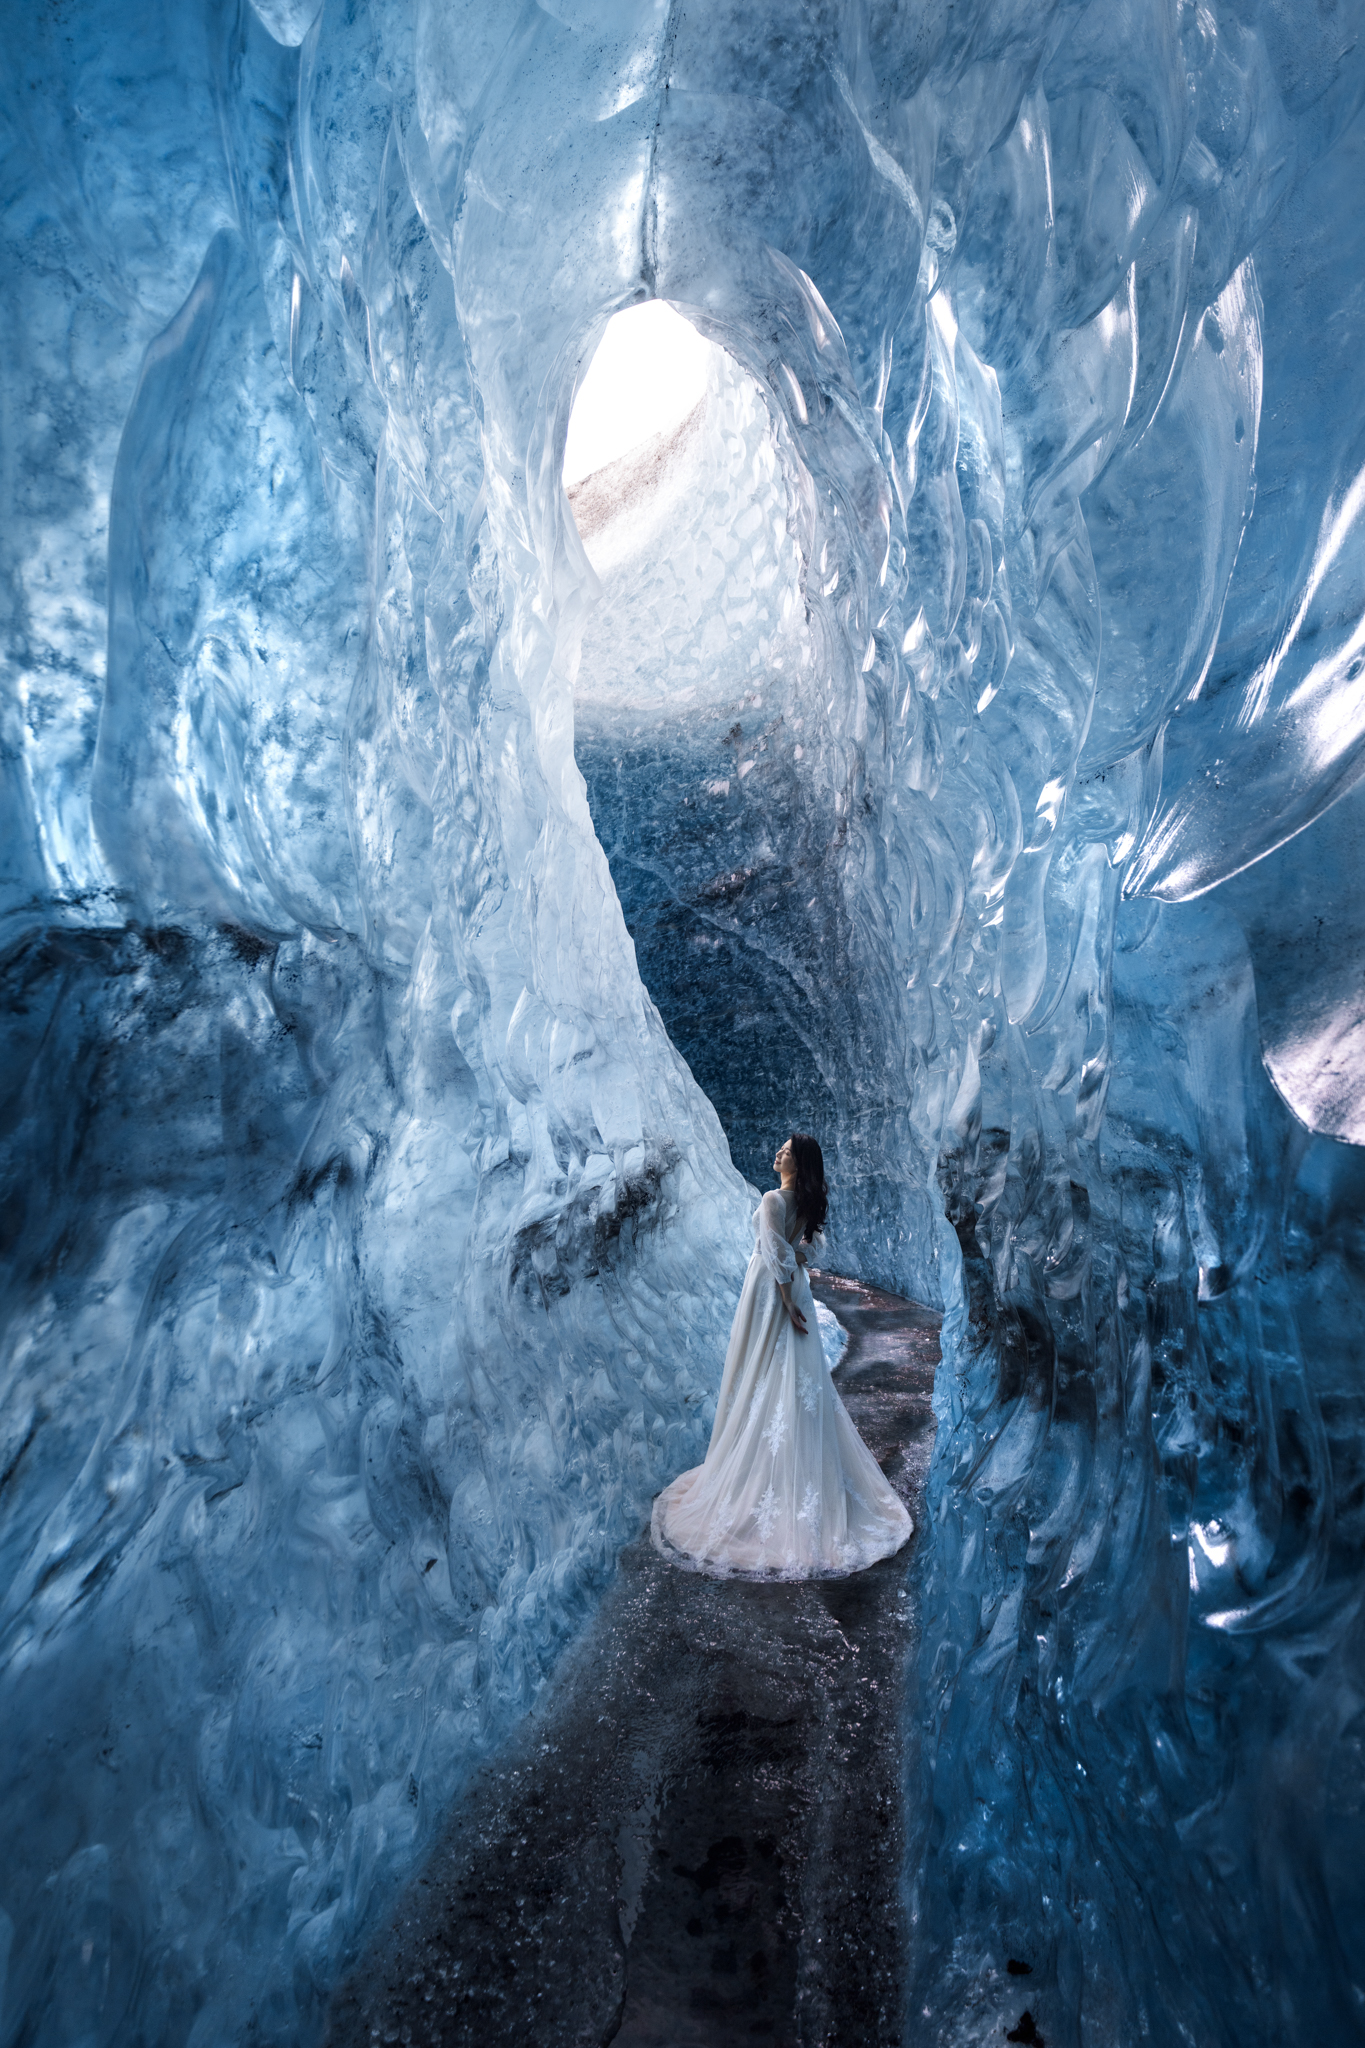 冰島, 冰島婚紗, Iceland Wedding, Ice Cave wedding, Donfer, 東法